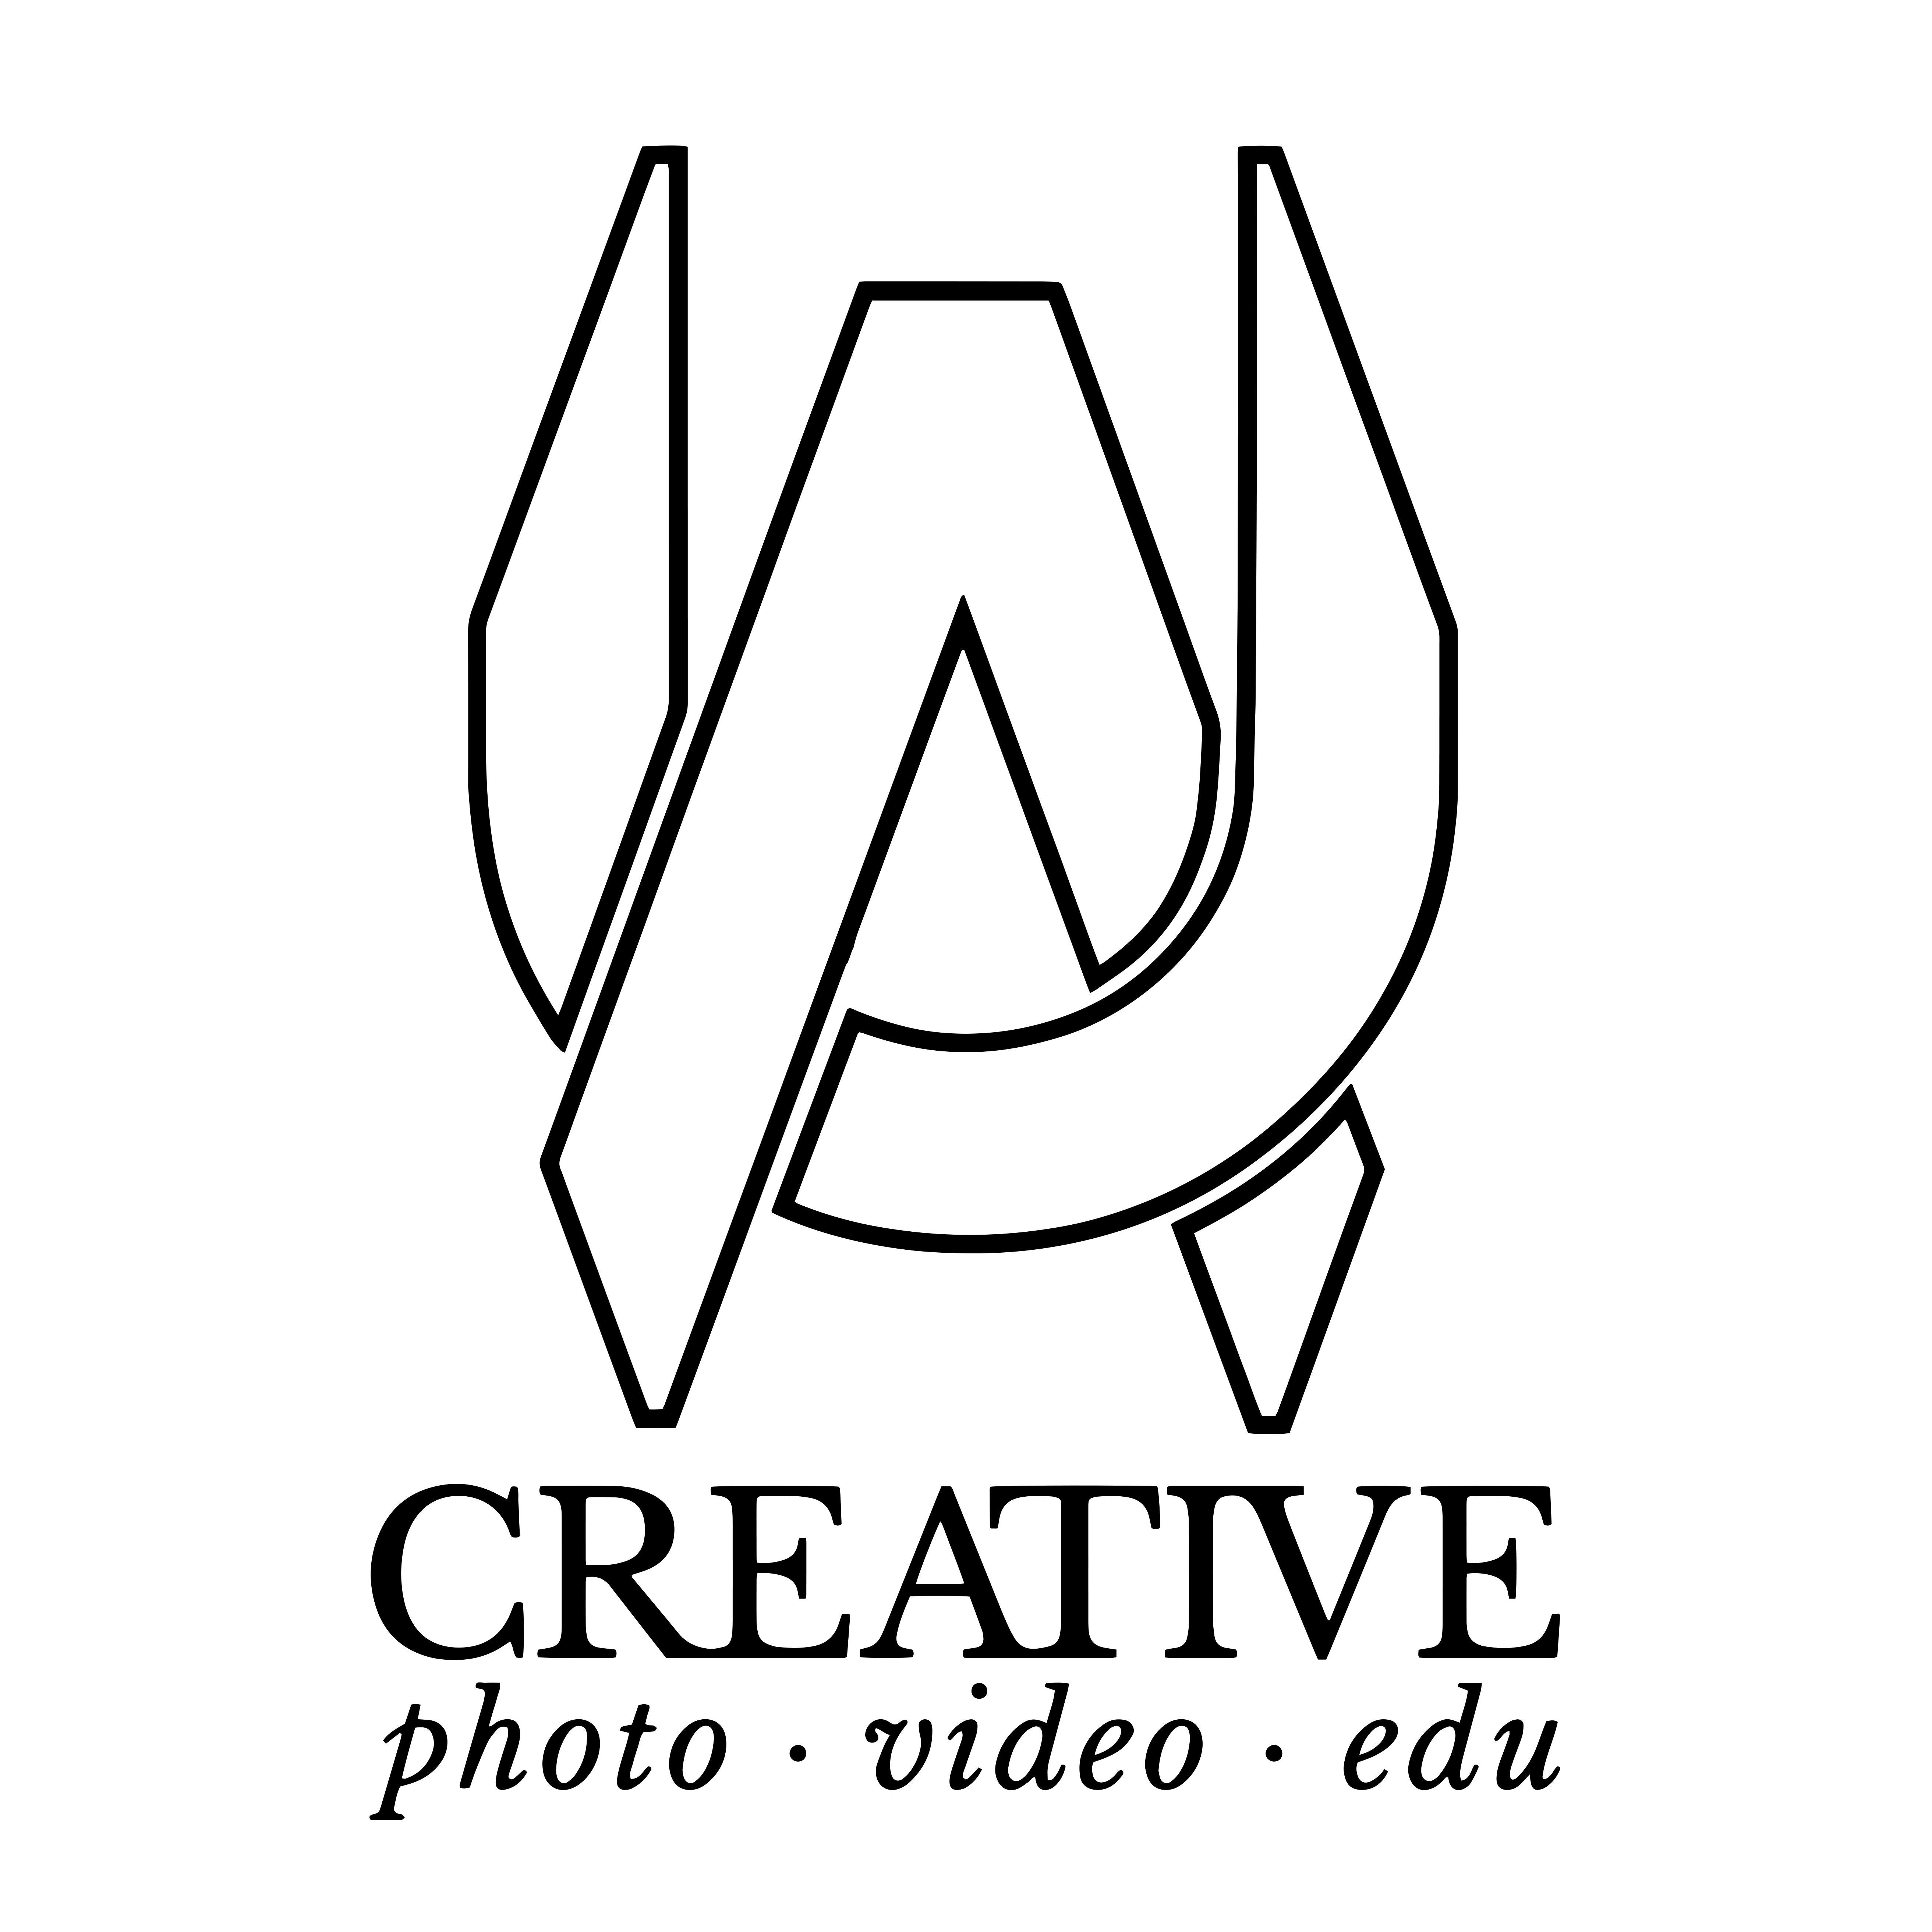 UA Logo - Creative Photography, Video, and Education Creative Studios